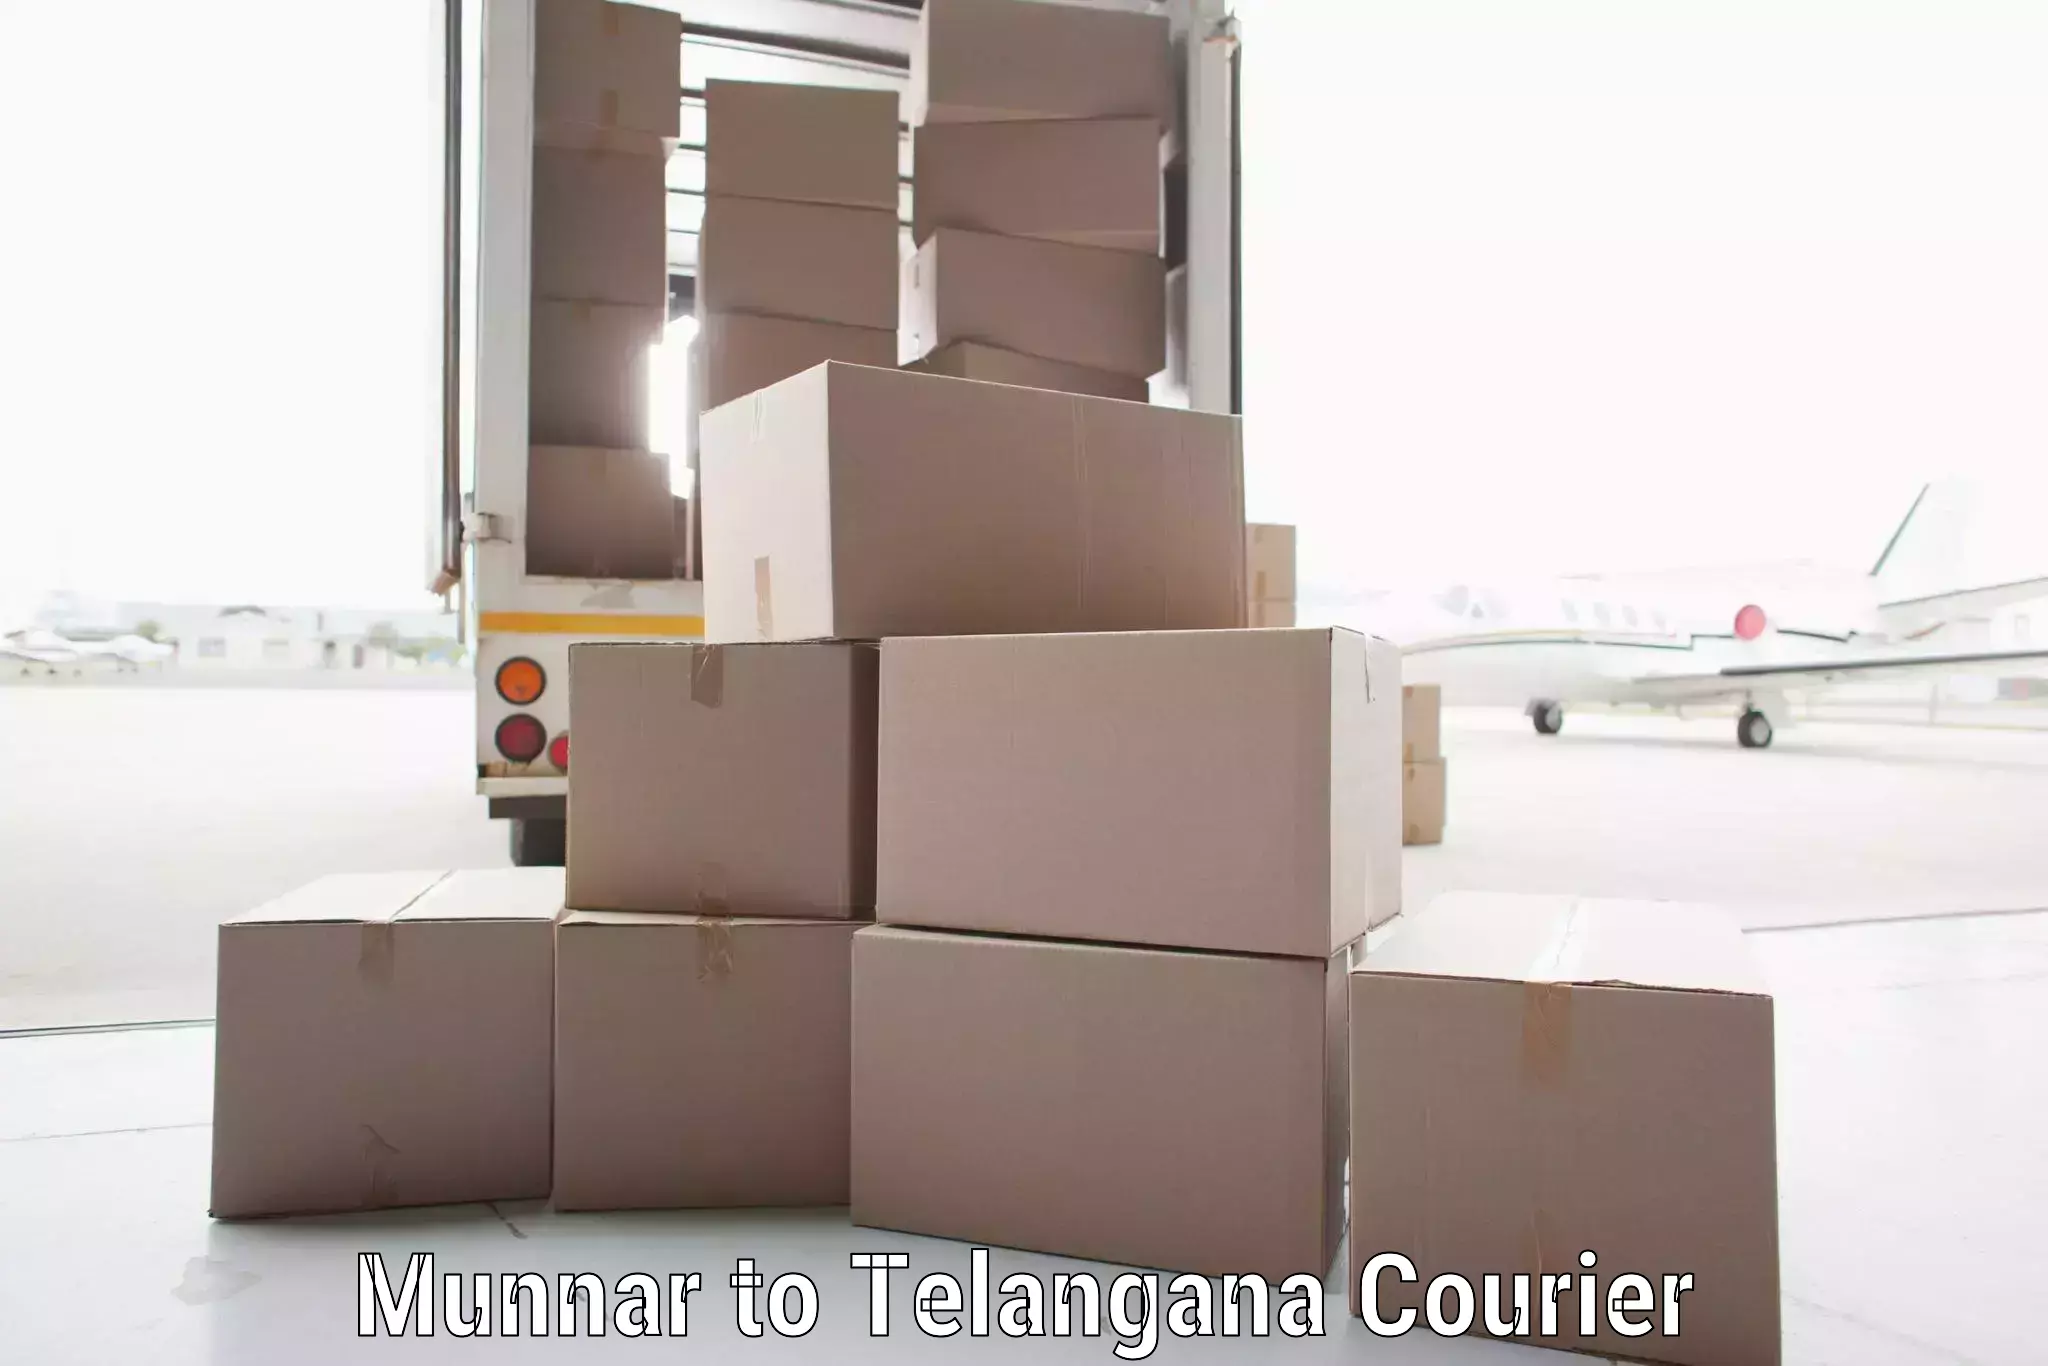 Digital courier platforms Munnar to Telangana